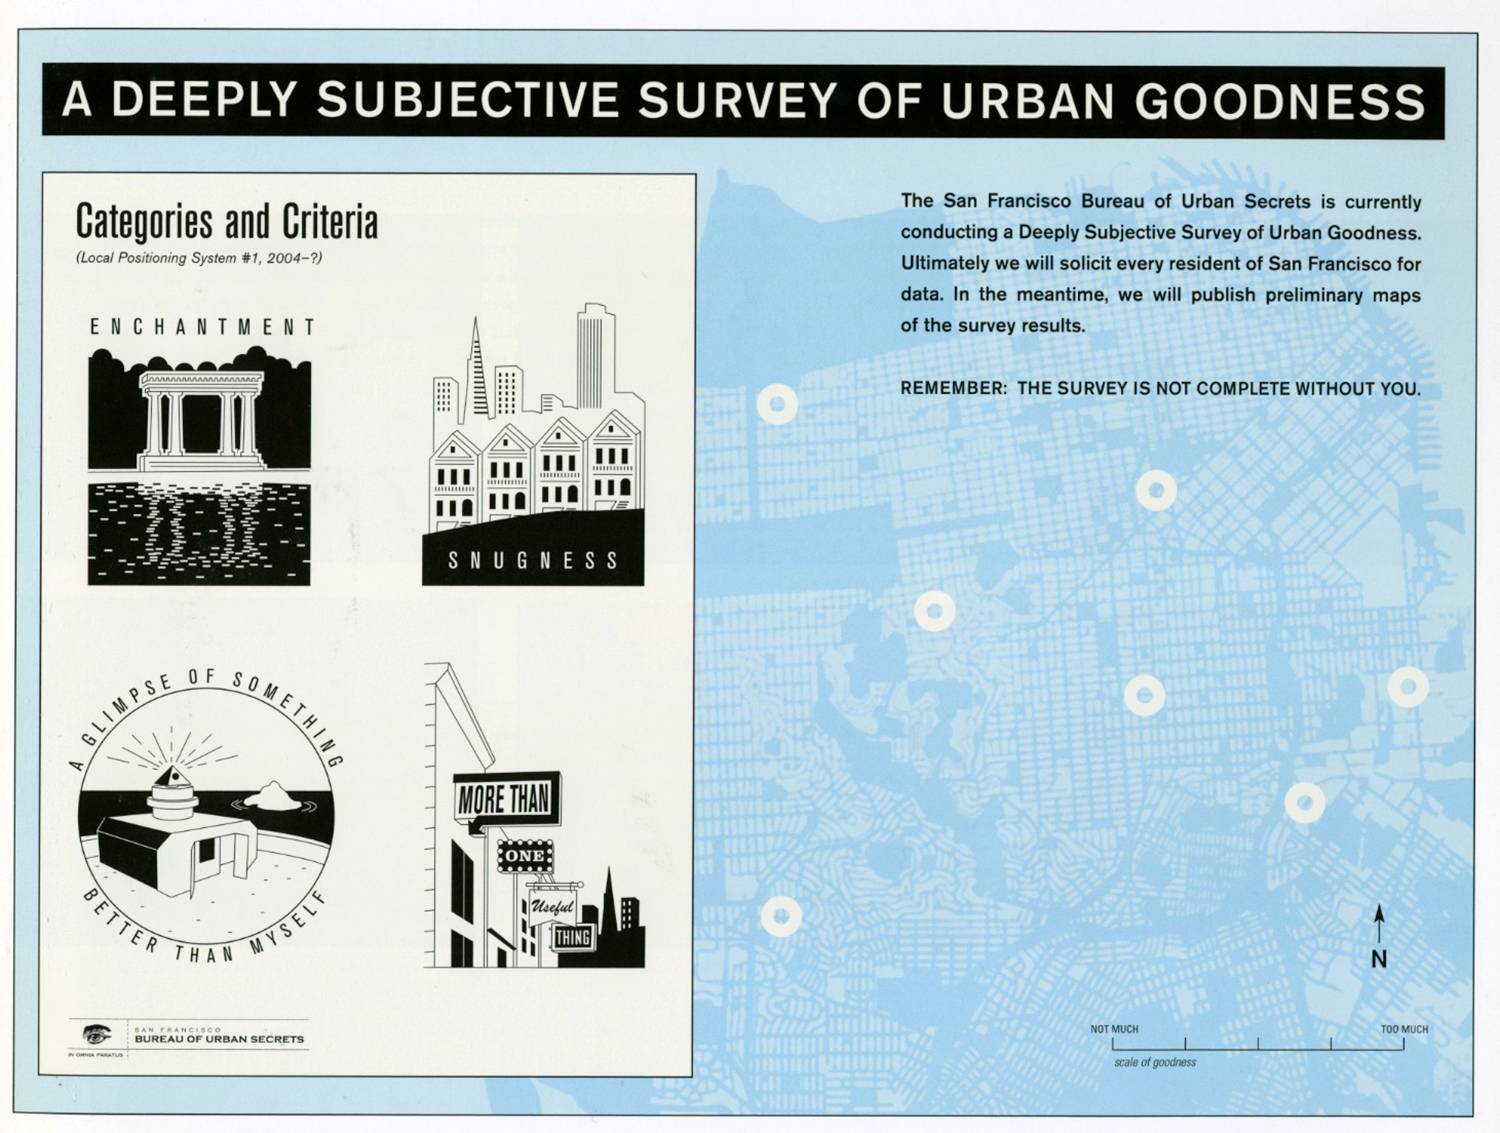 Bureau of Urban Secrets, A Deeply Subjective Survey of Urban Goodness